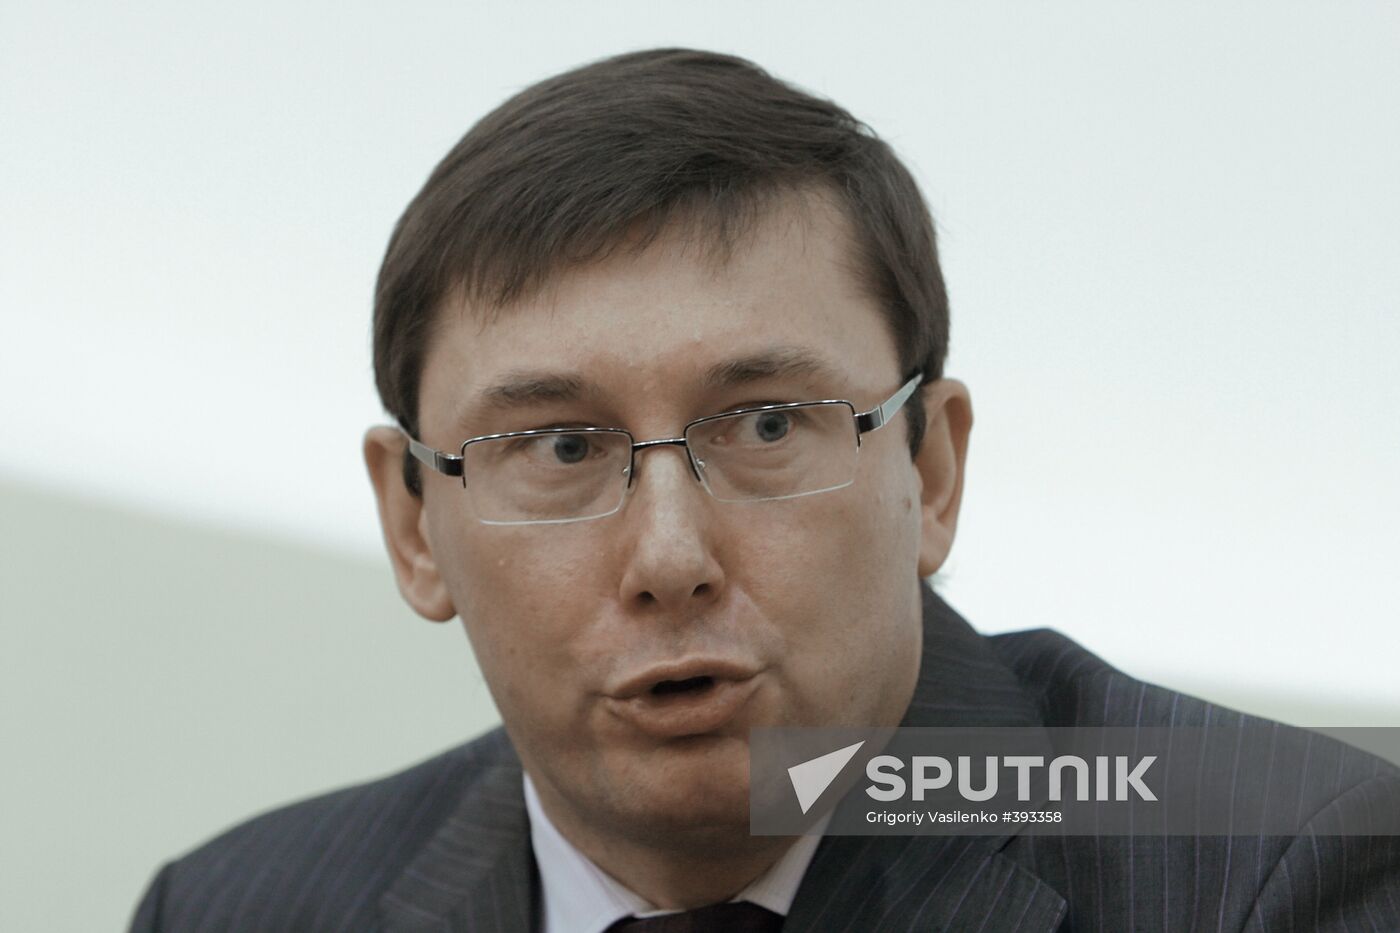 Yuri Lutsenko's news conference in Ukrainian Foreign Ministry